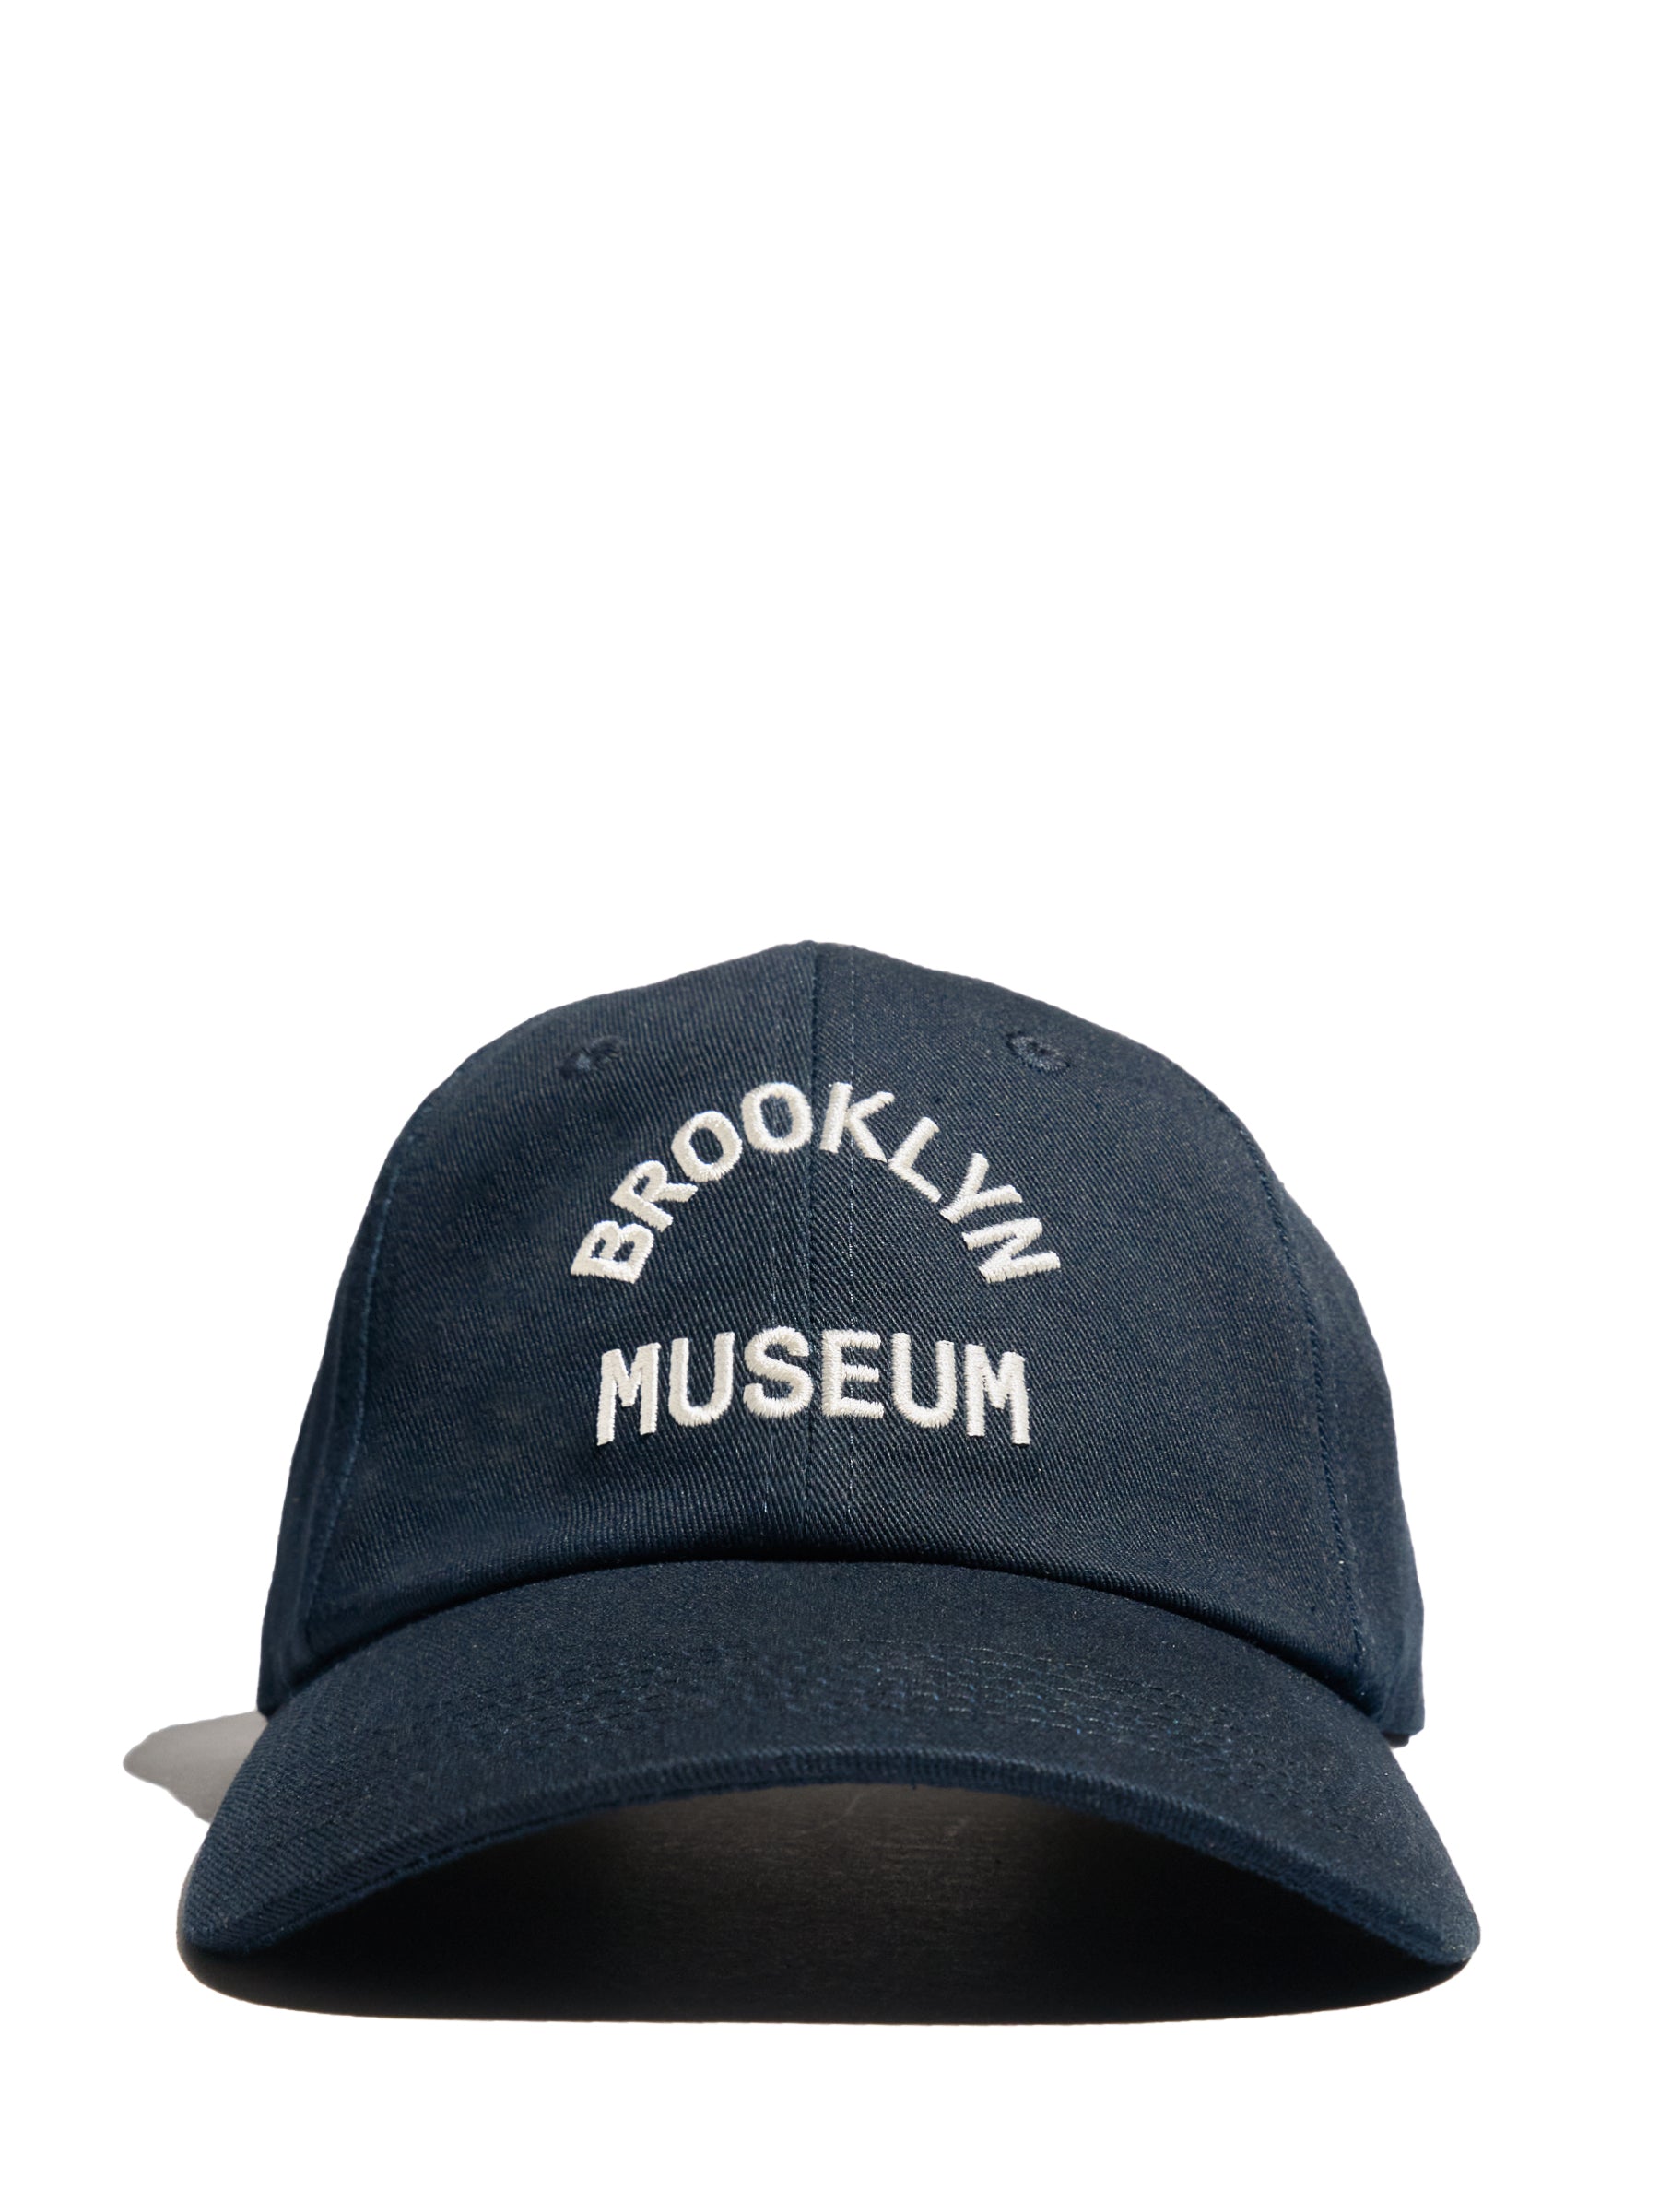 Hats – Brooklyn Museum